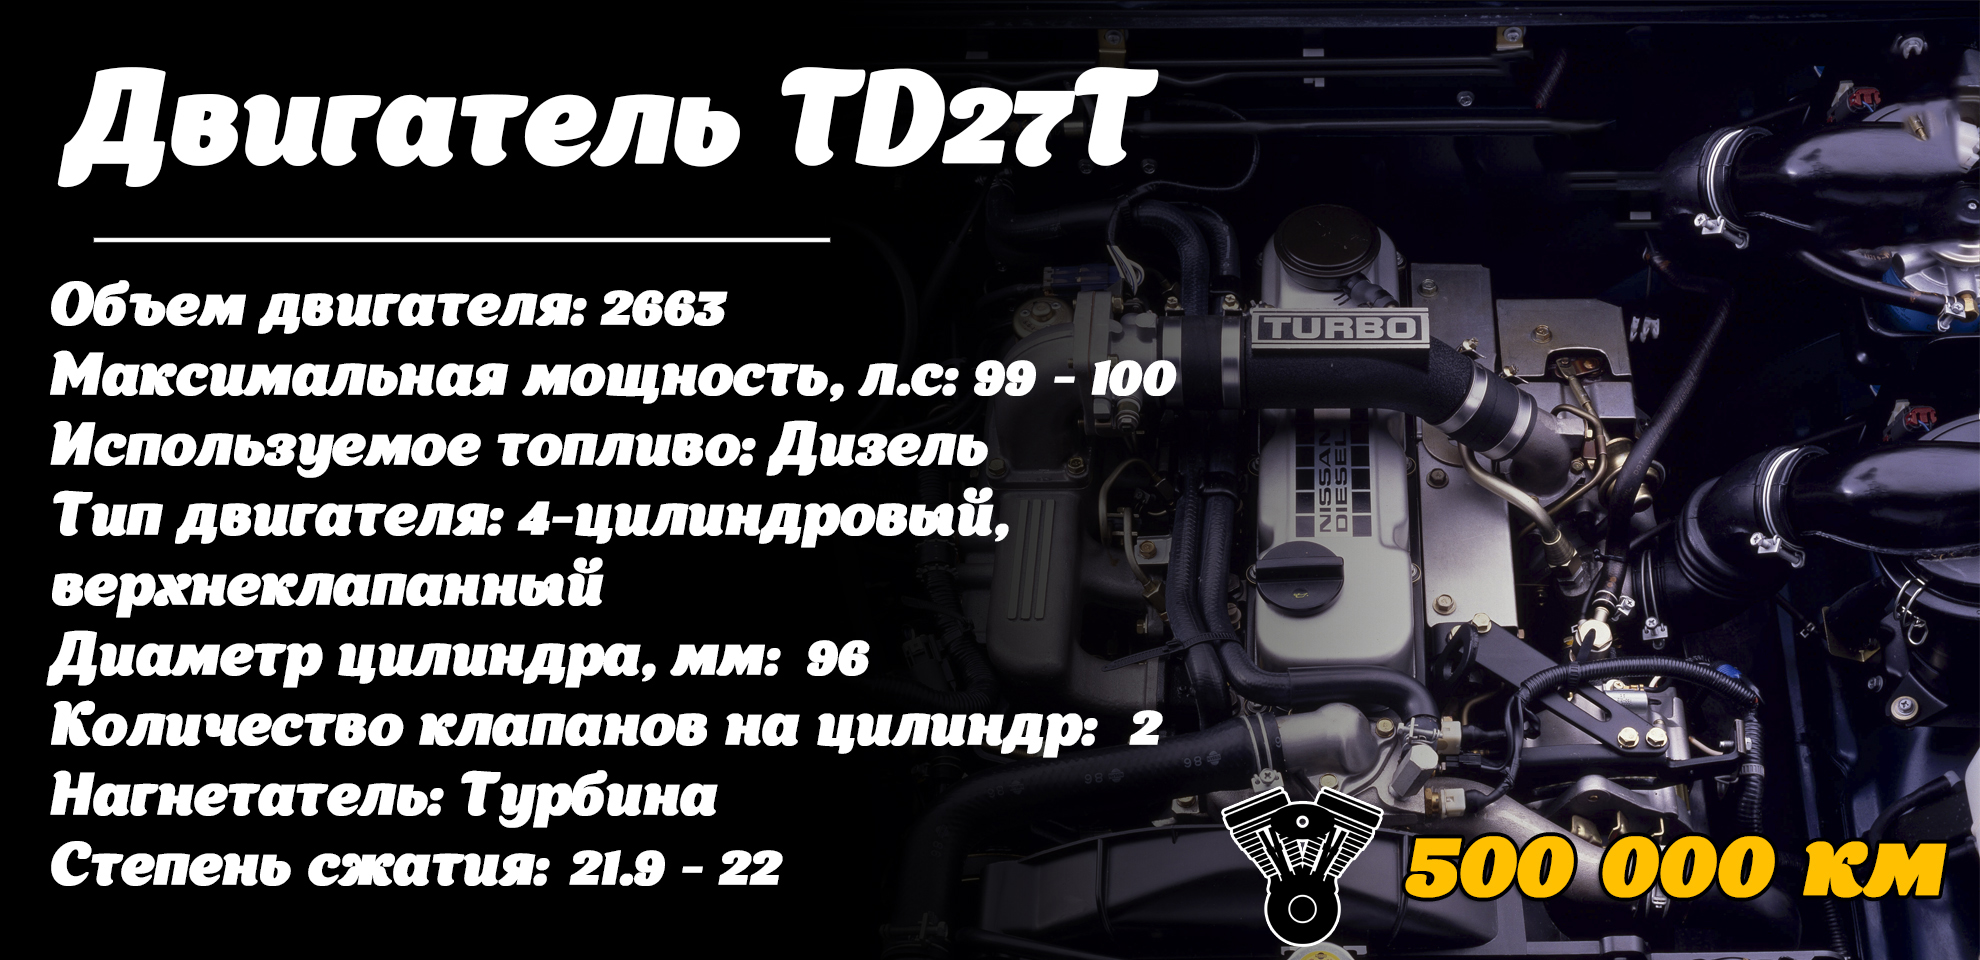 двигатель TD27T